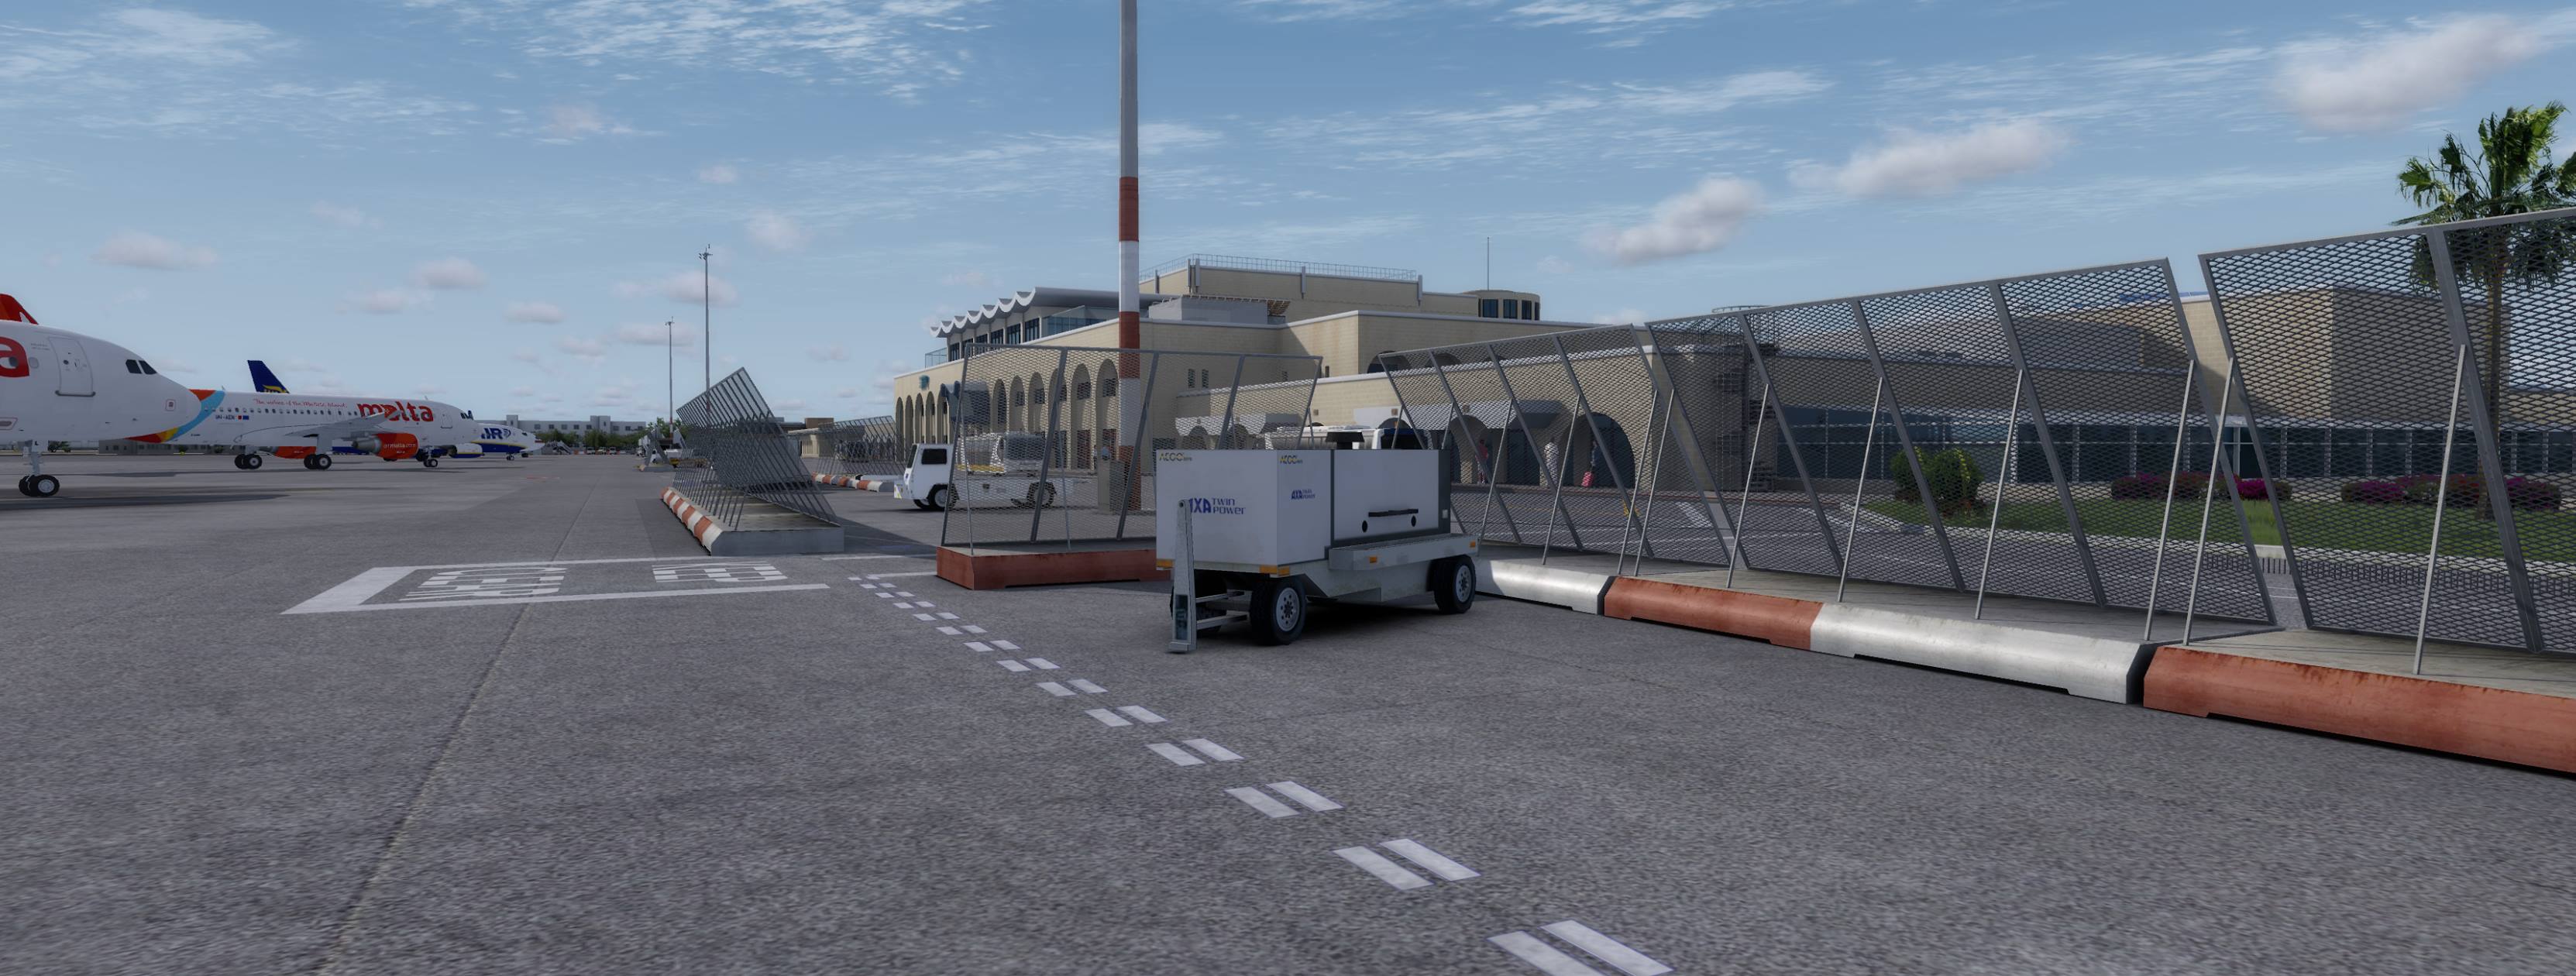 JustSim Announce Malta Airport for Prepar3D